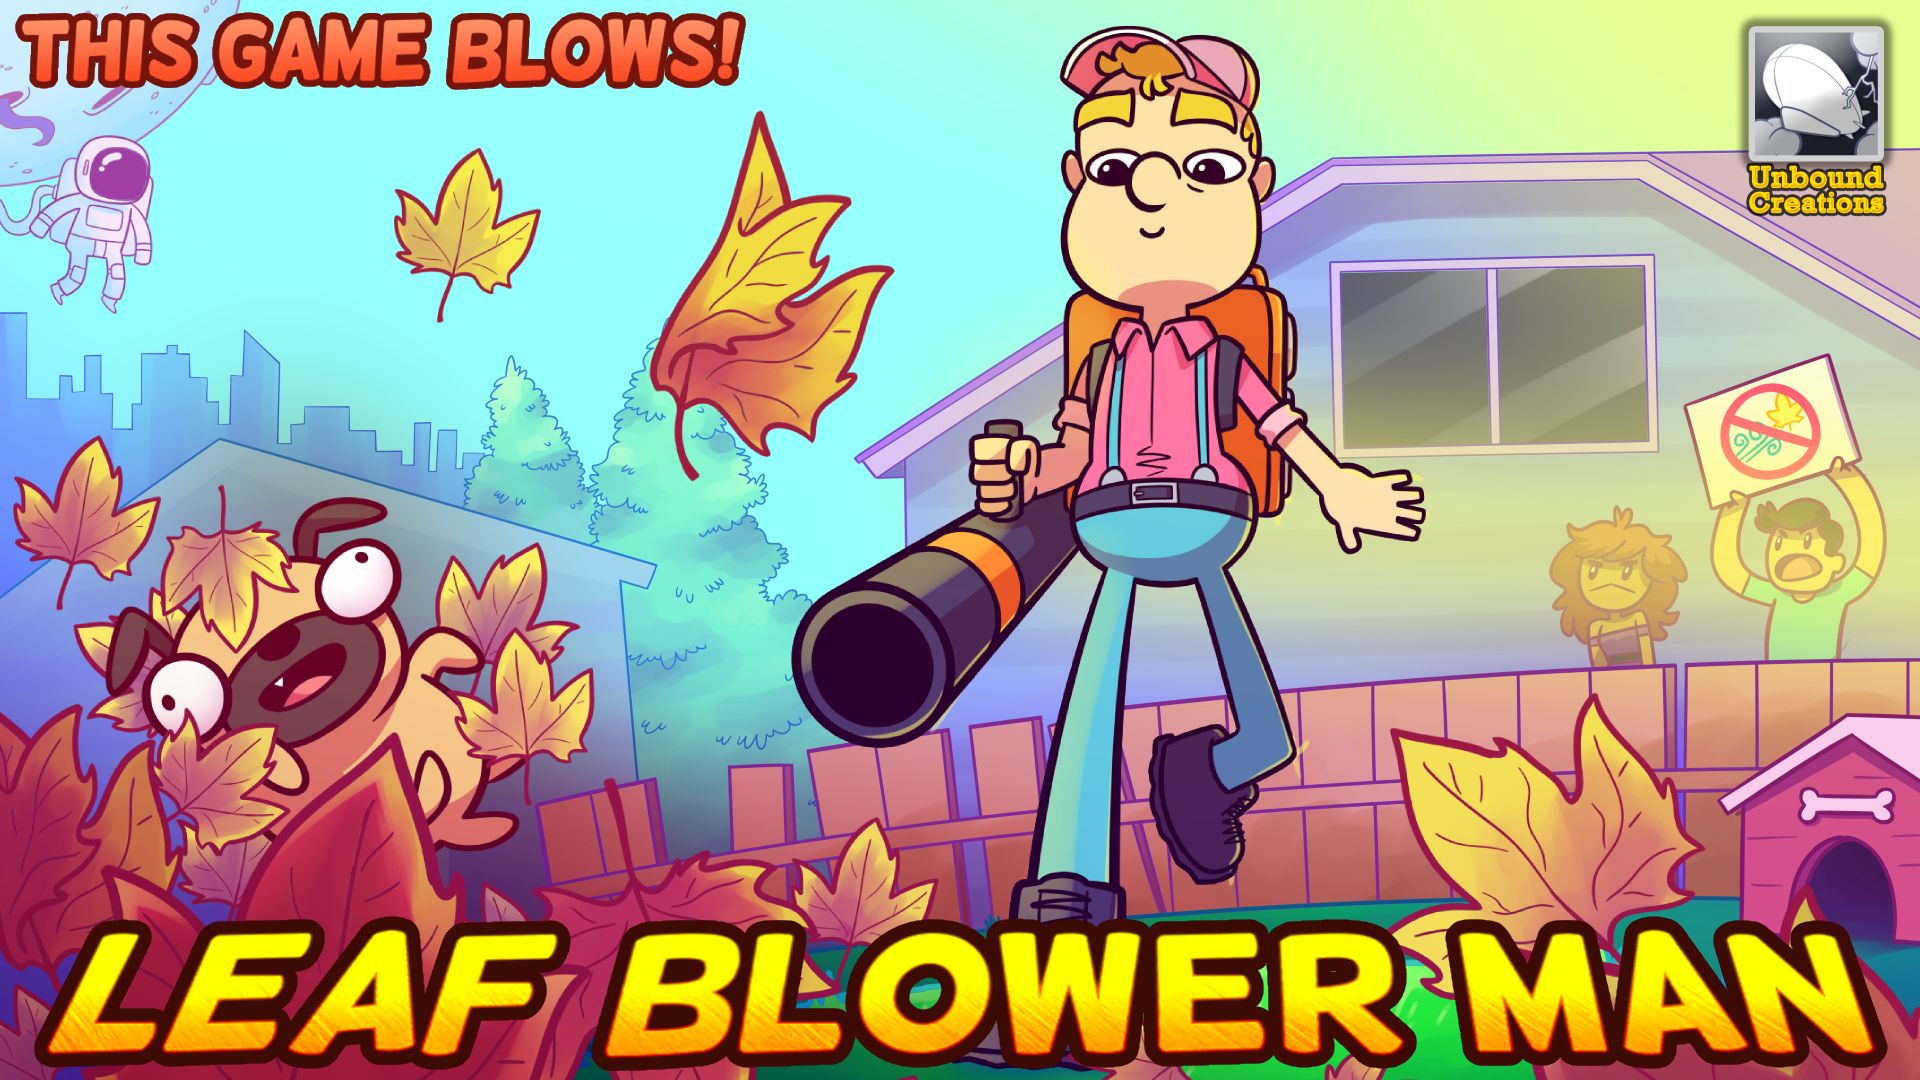 Leaf Blower Man Game: This Game Blows!